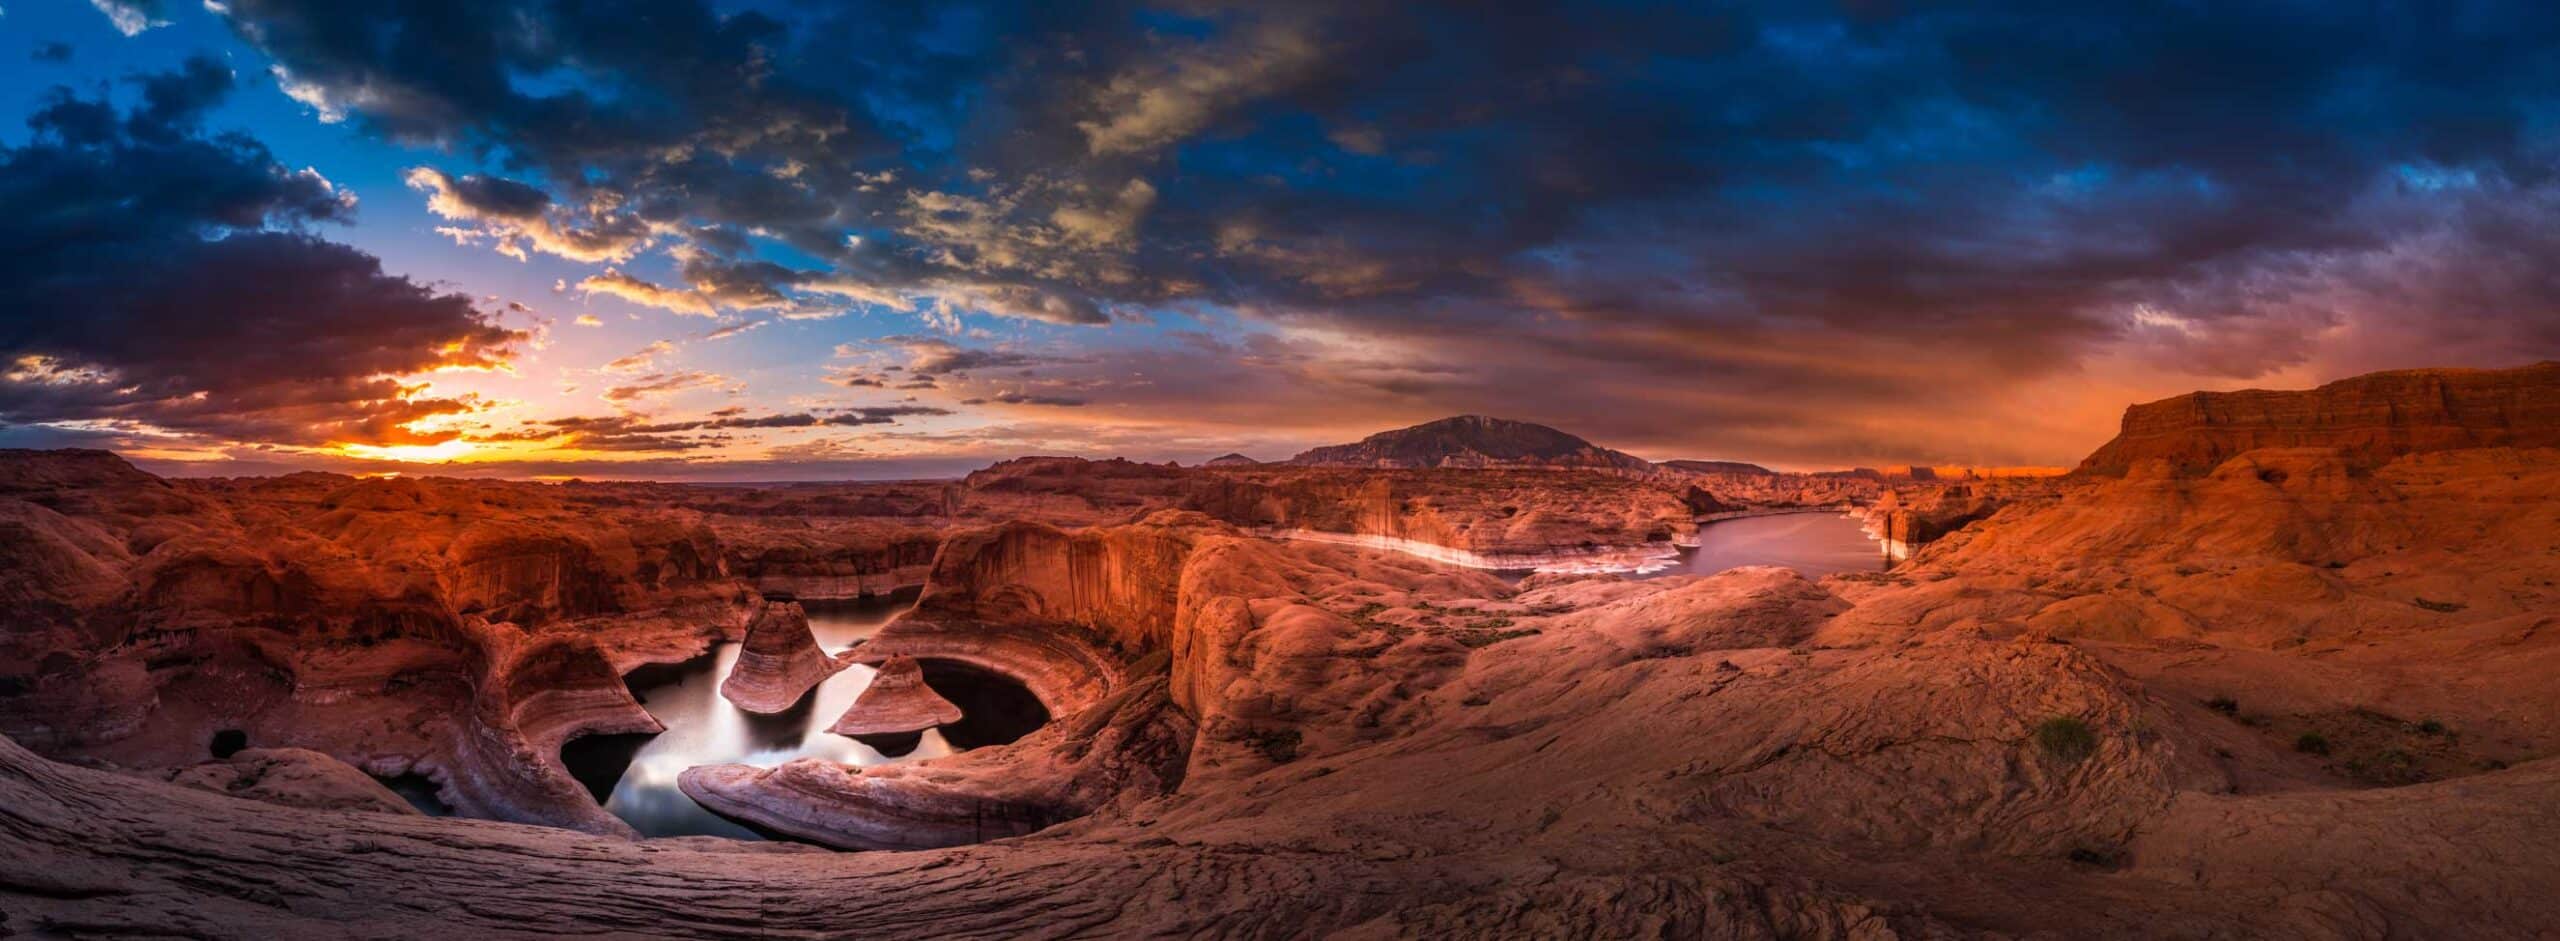 Reflection-Canyon-and-Navajo-Mountain-in-Utah-at-Sunrise